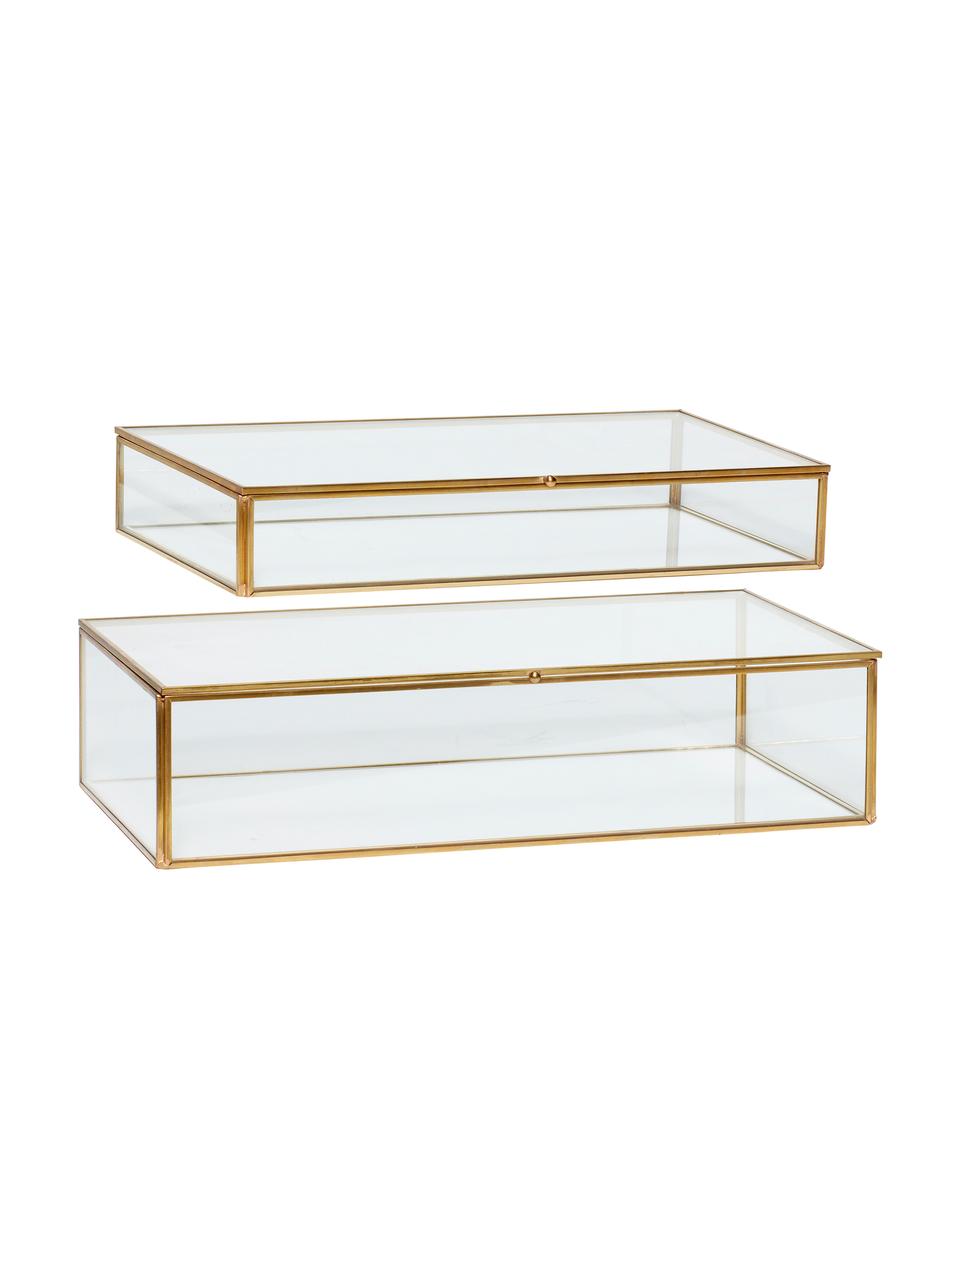 Set de cajas Karia, 2 pzas., Caja: vidrio, Latón, transparente, Set de diferentes tamaños